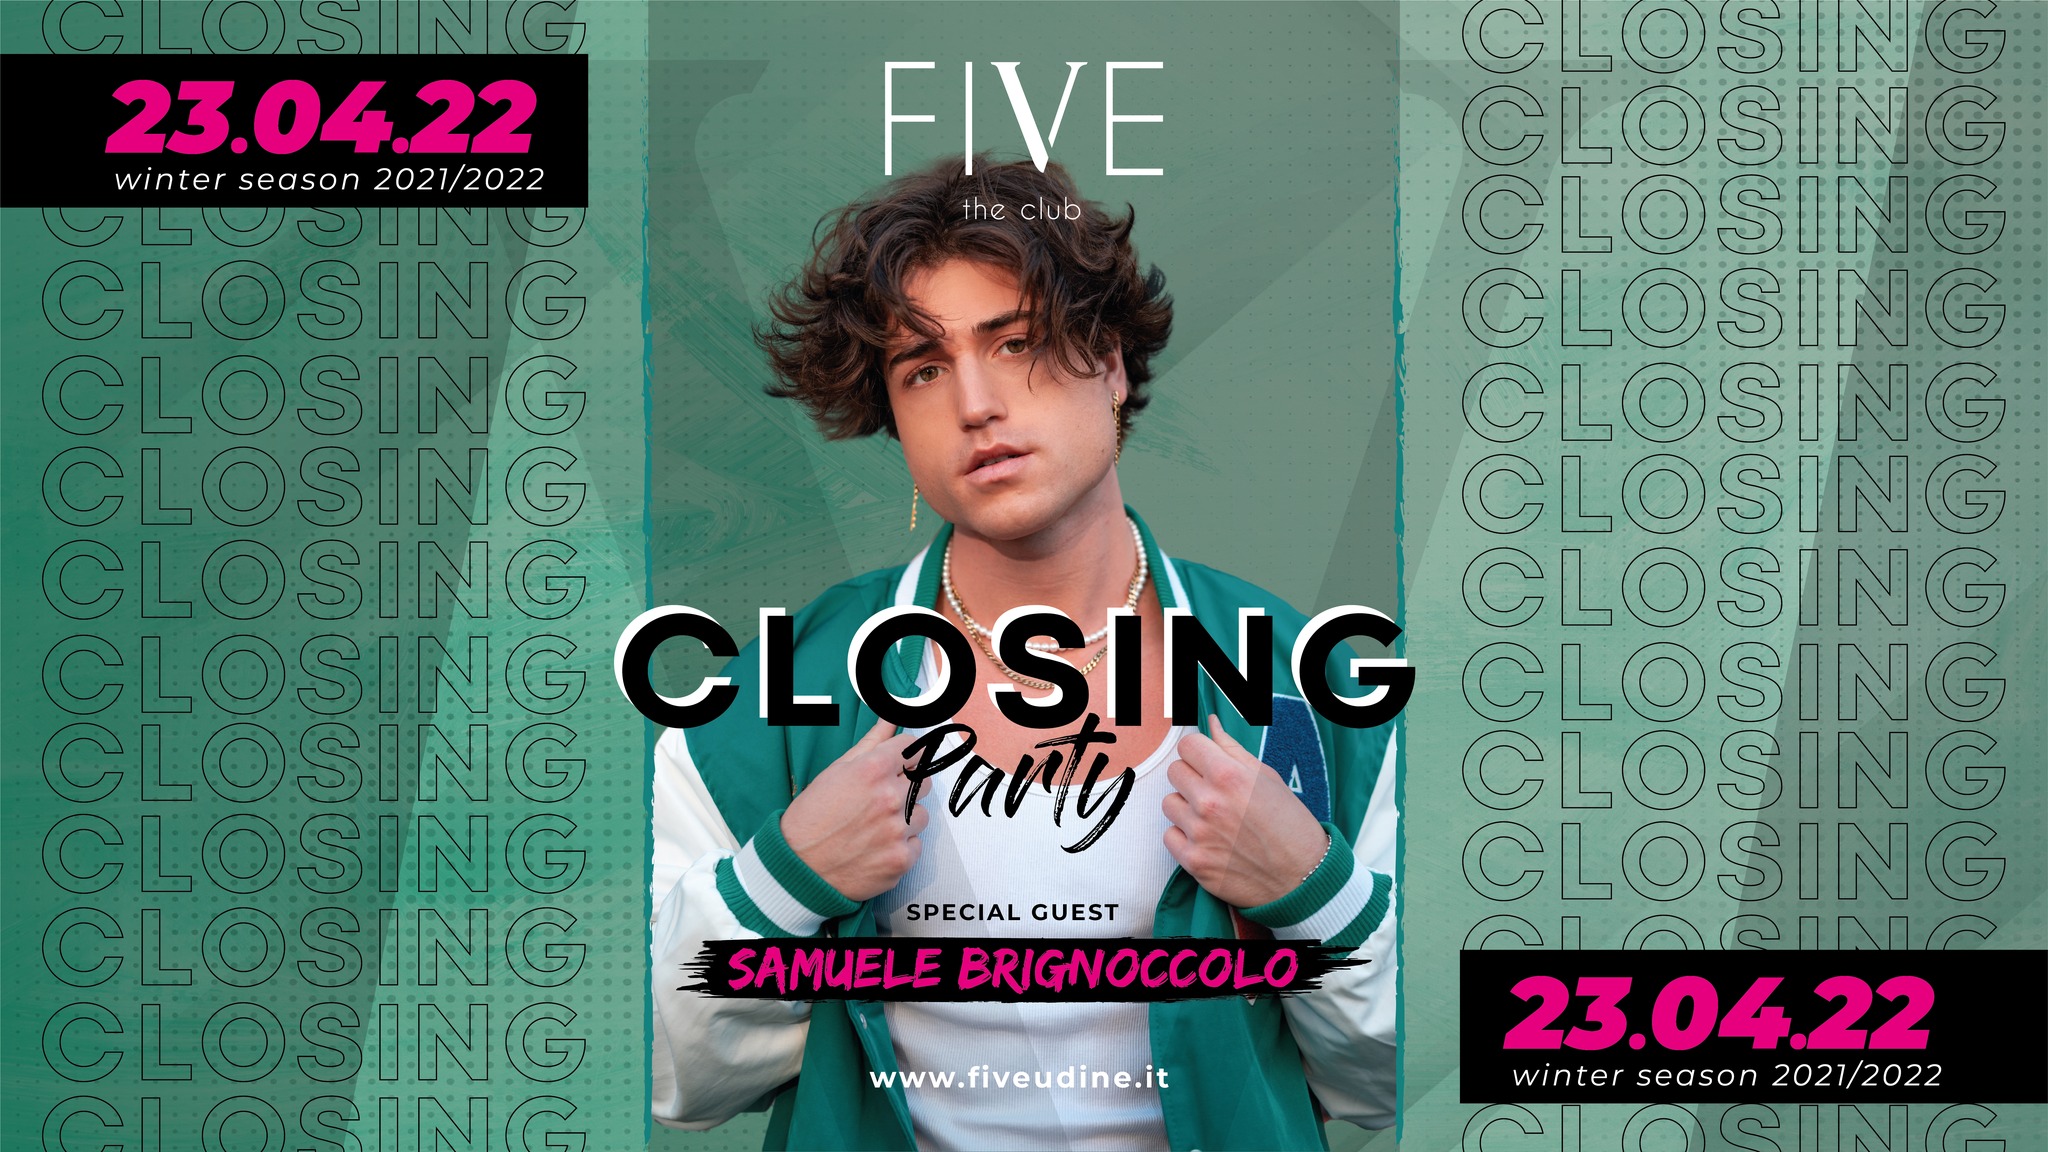 CLOSING PARTY Five Club, Tavagnacco